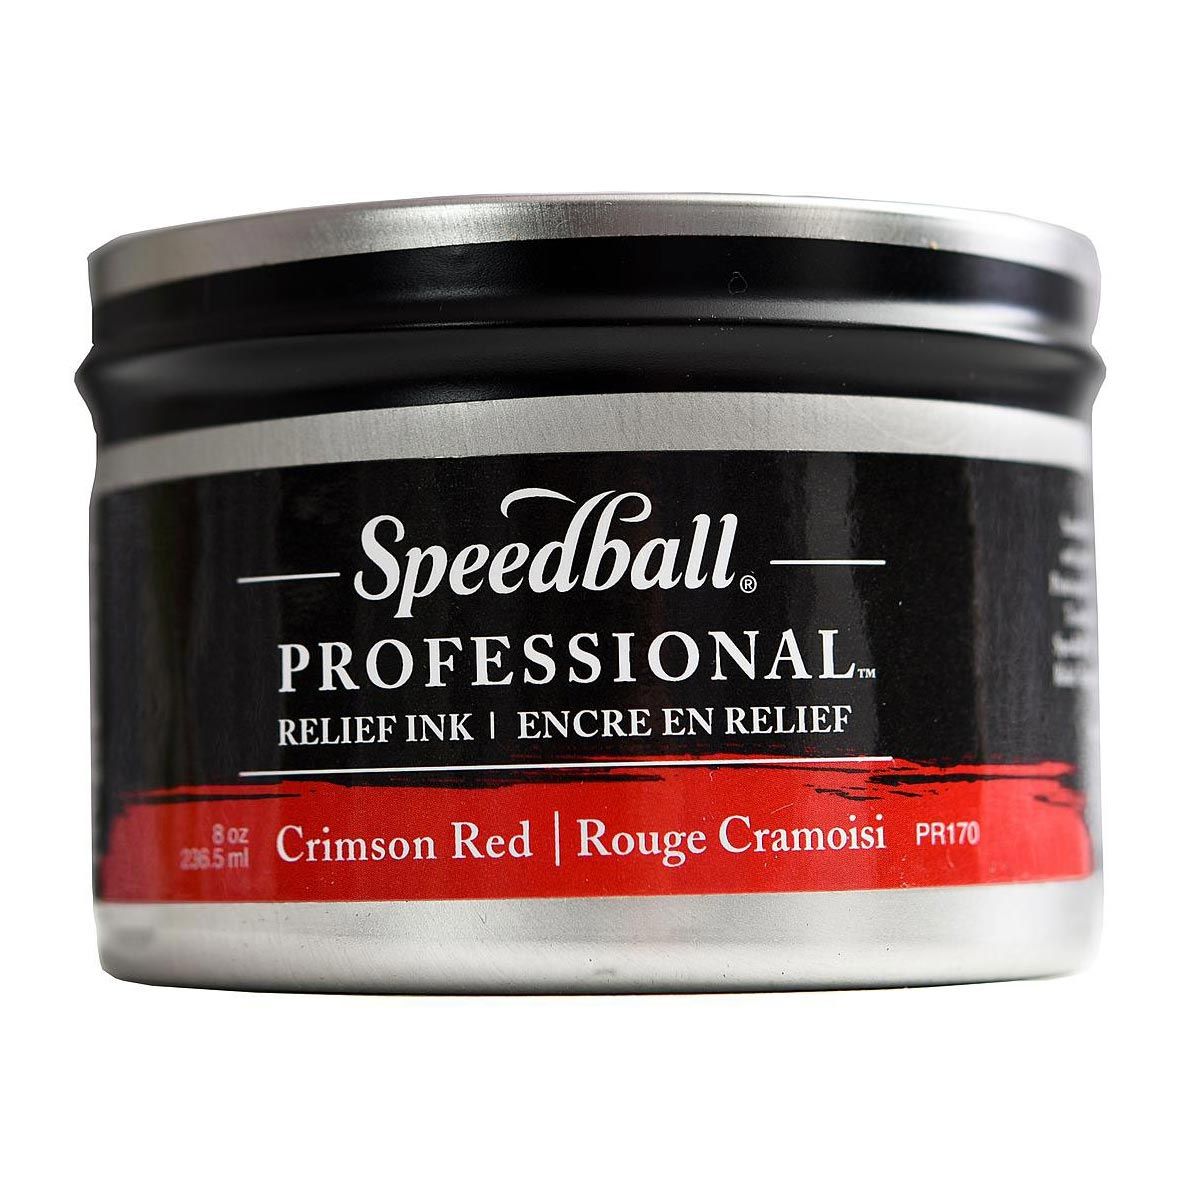 Speedball Professional Relief Ink - Crimson Red 8 oz